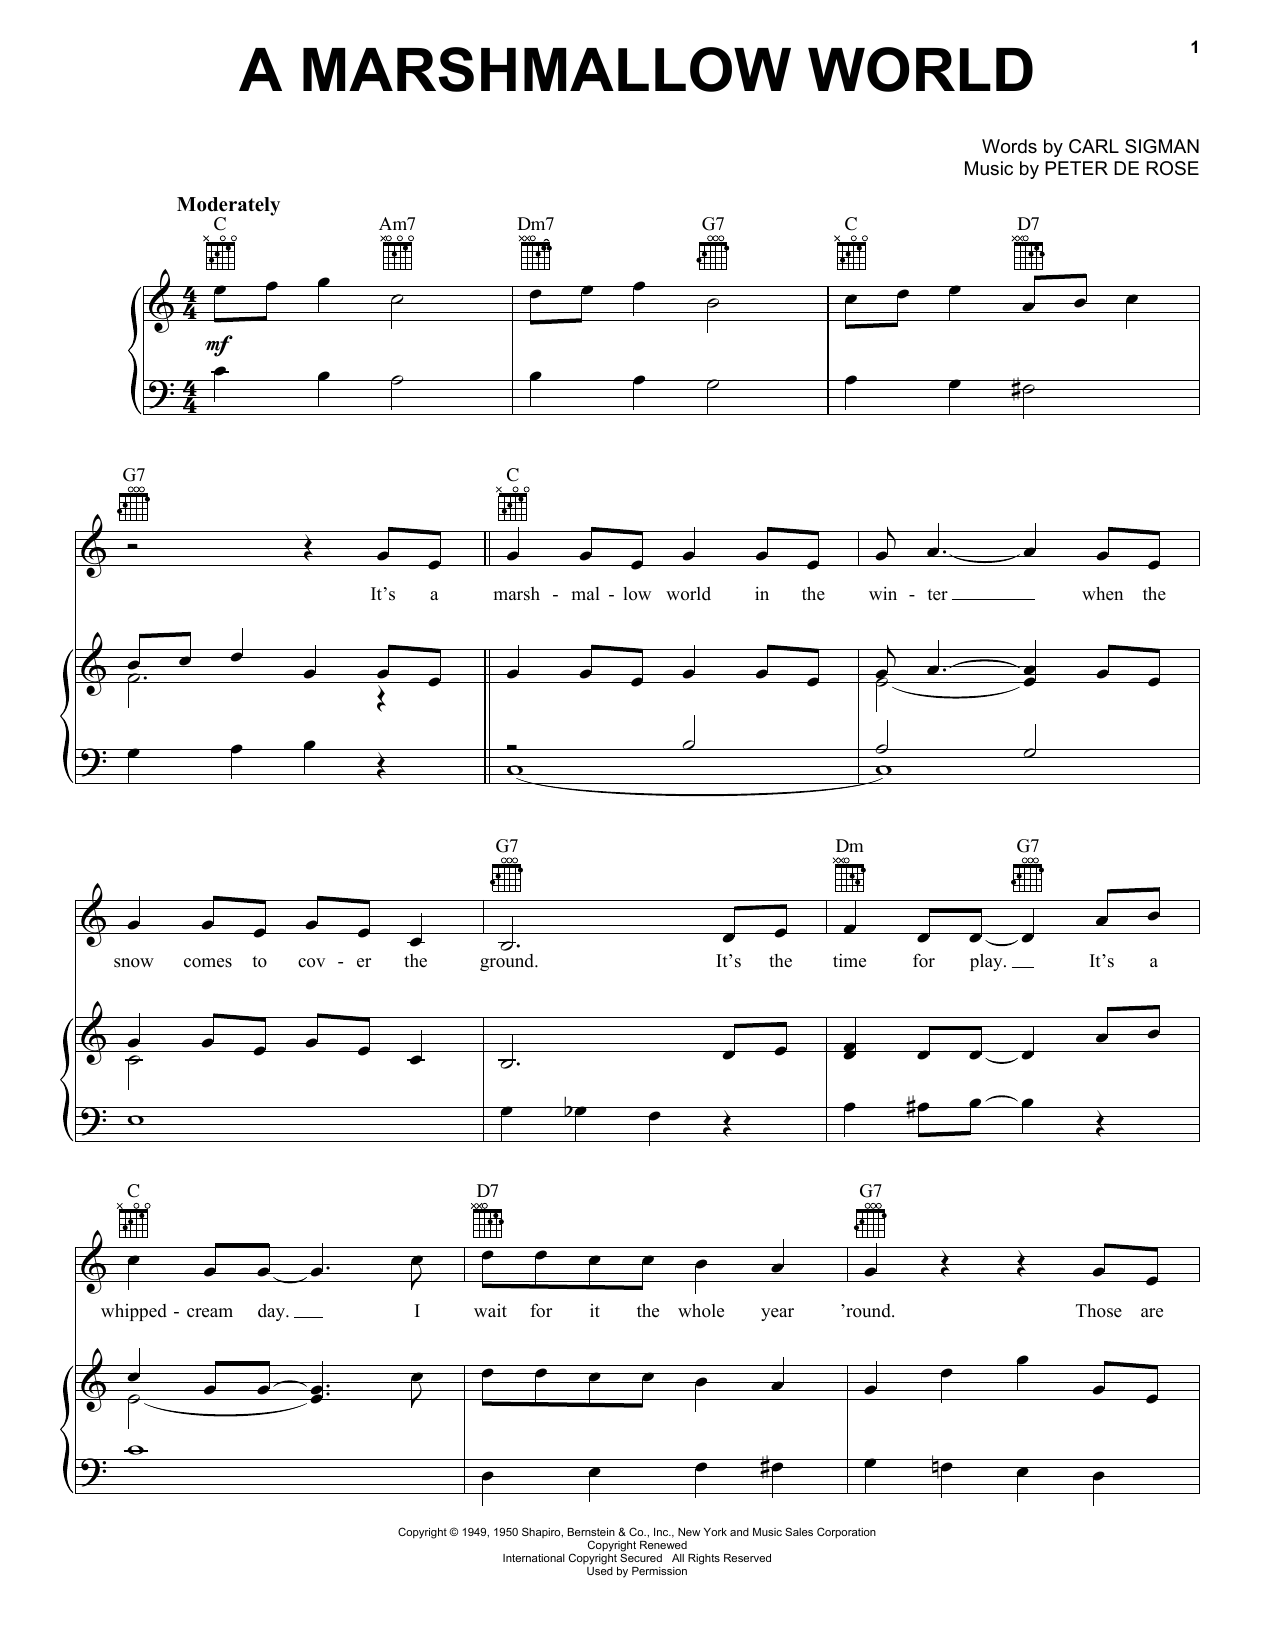 Carl Sigman & Peter De Rose A Marshmallow World Sheet Music Notes & Chords for Tenor Saxophone - Download or Print PDF